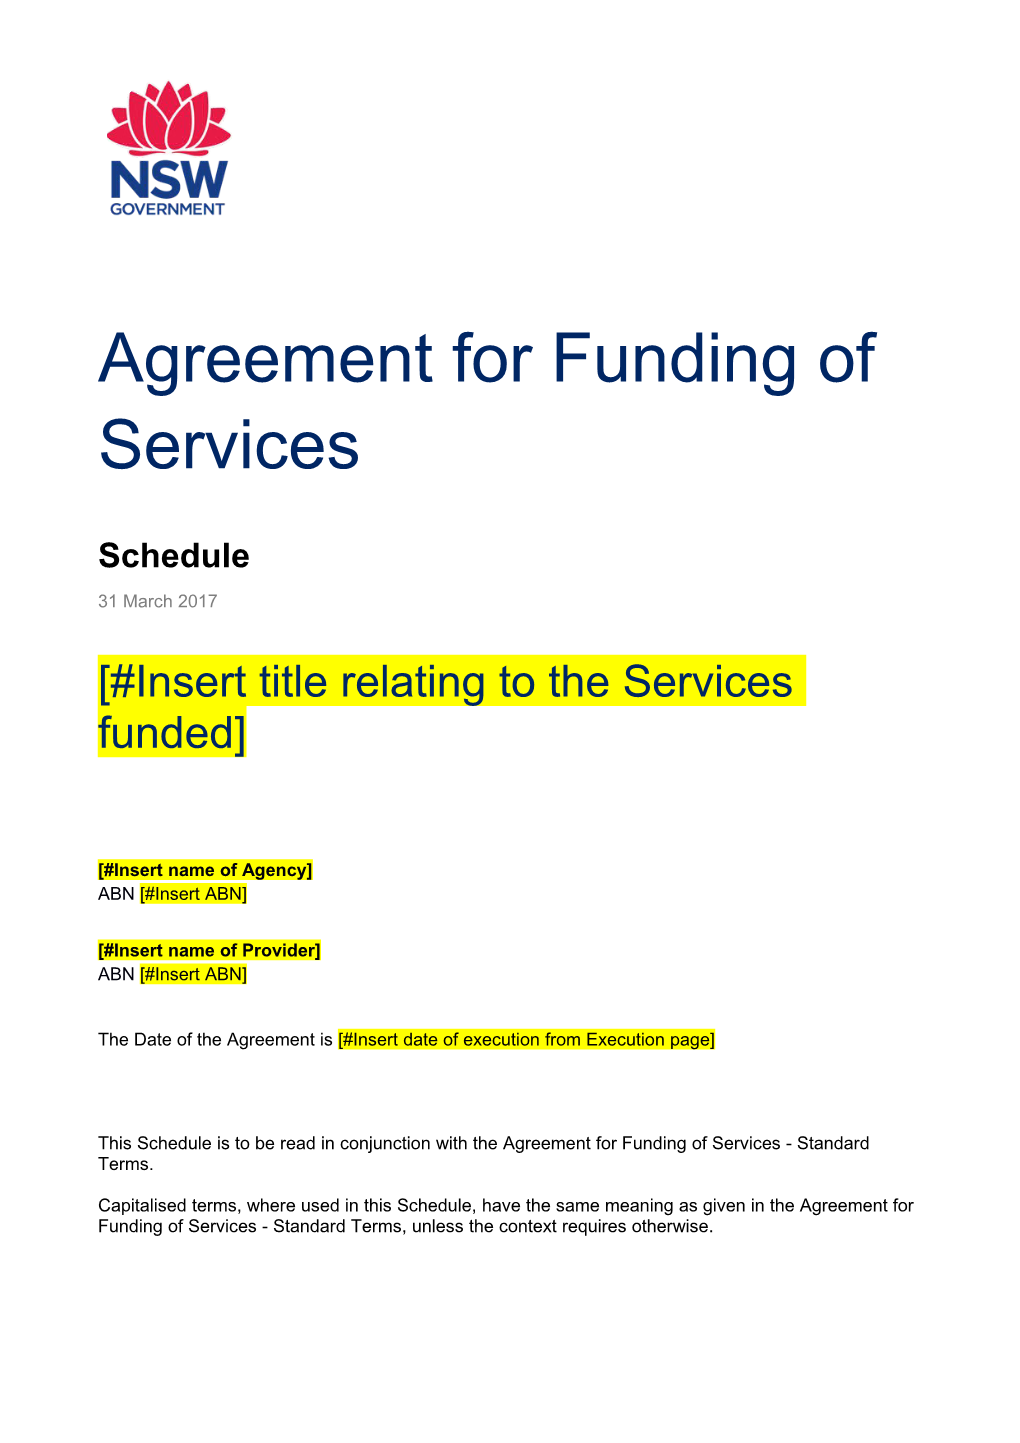 Service Agreement (Part C) Community Mental Health Services